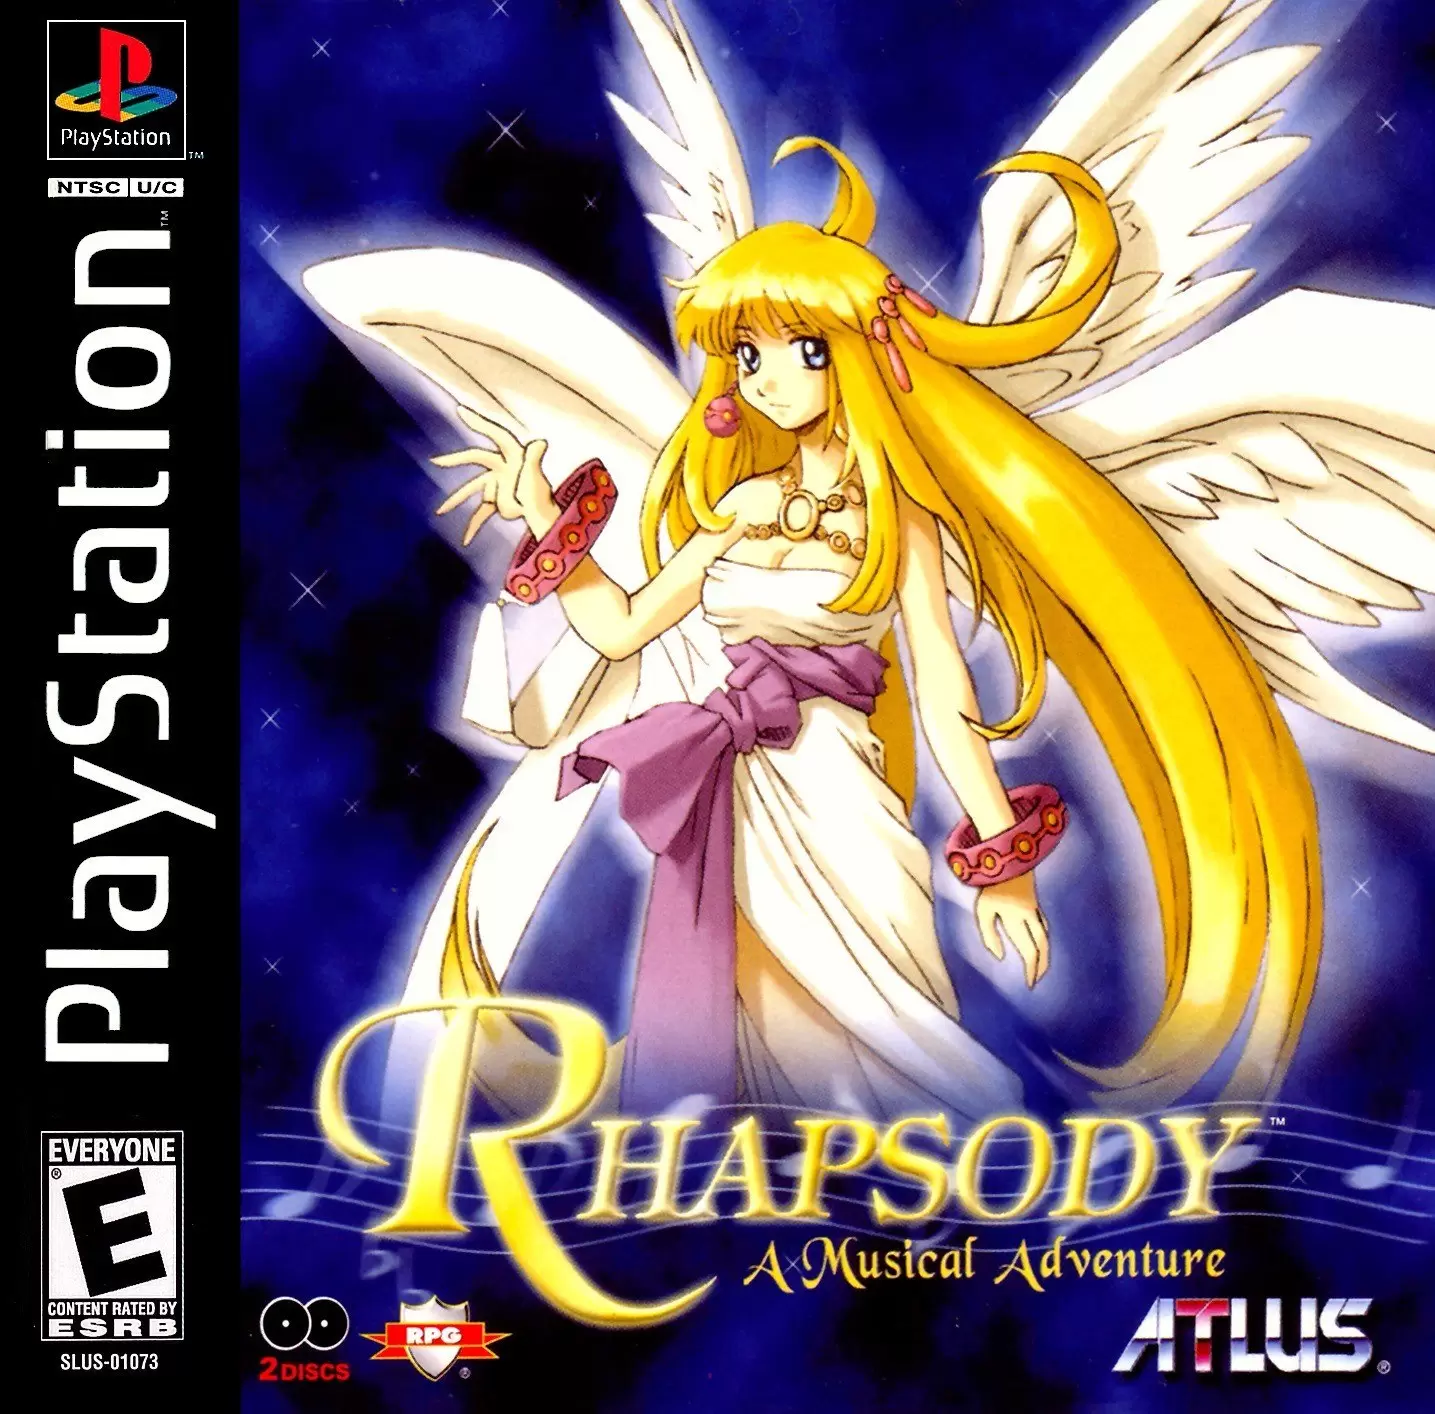 Playstation games - Rhapsody A Musical Adventure